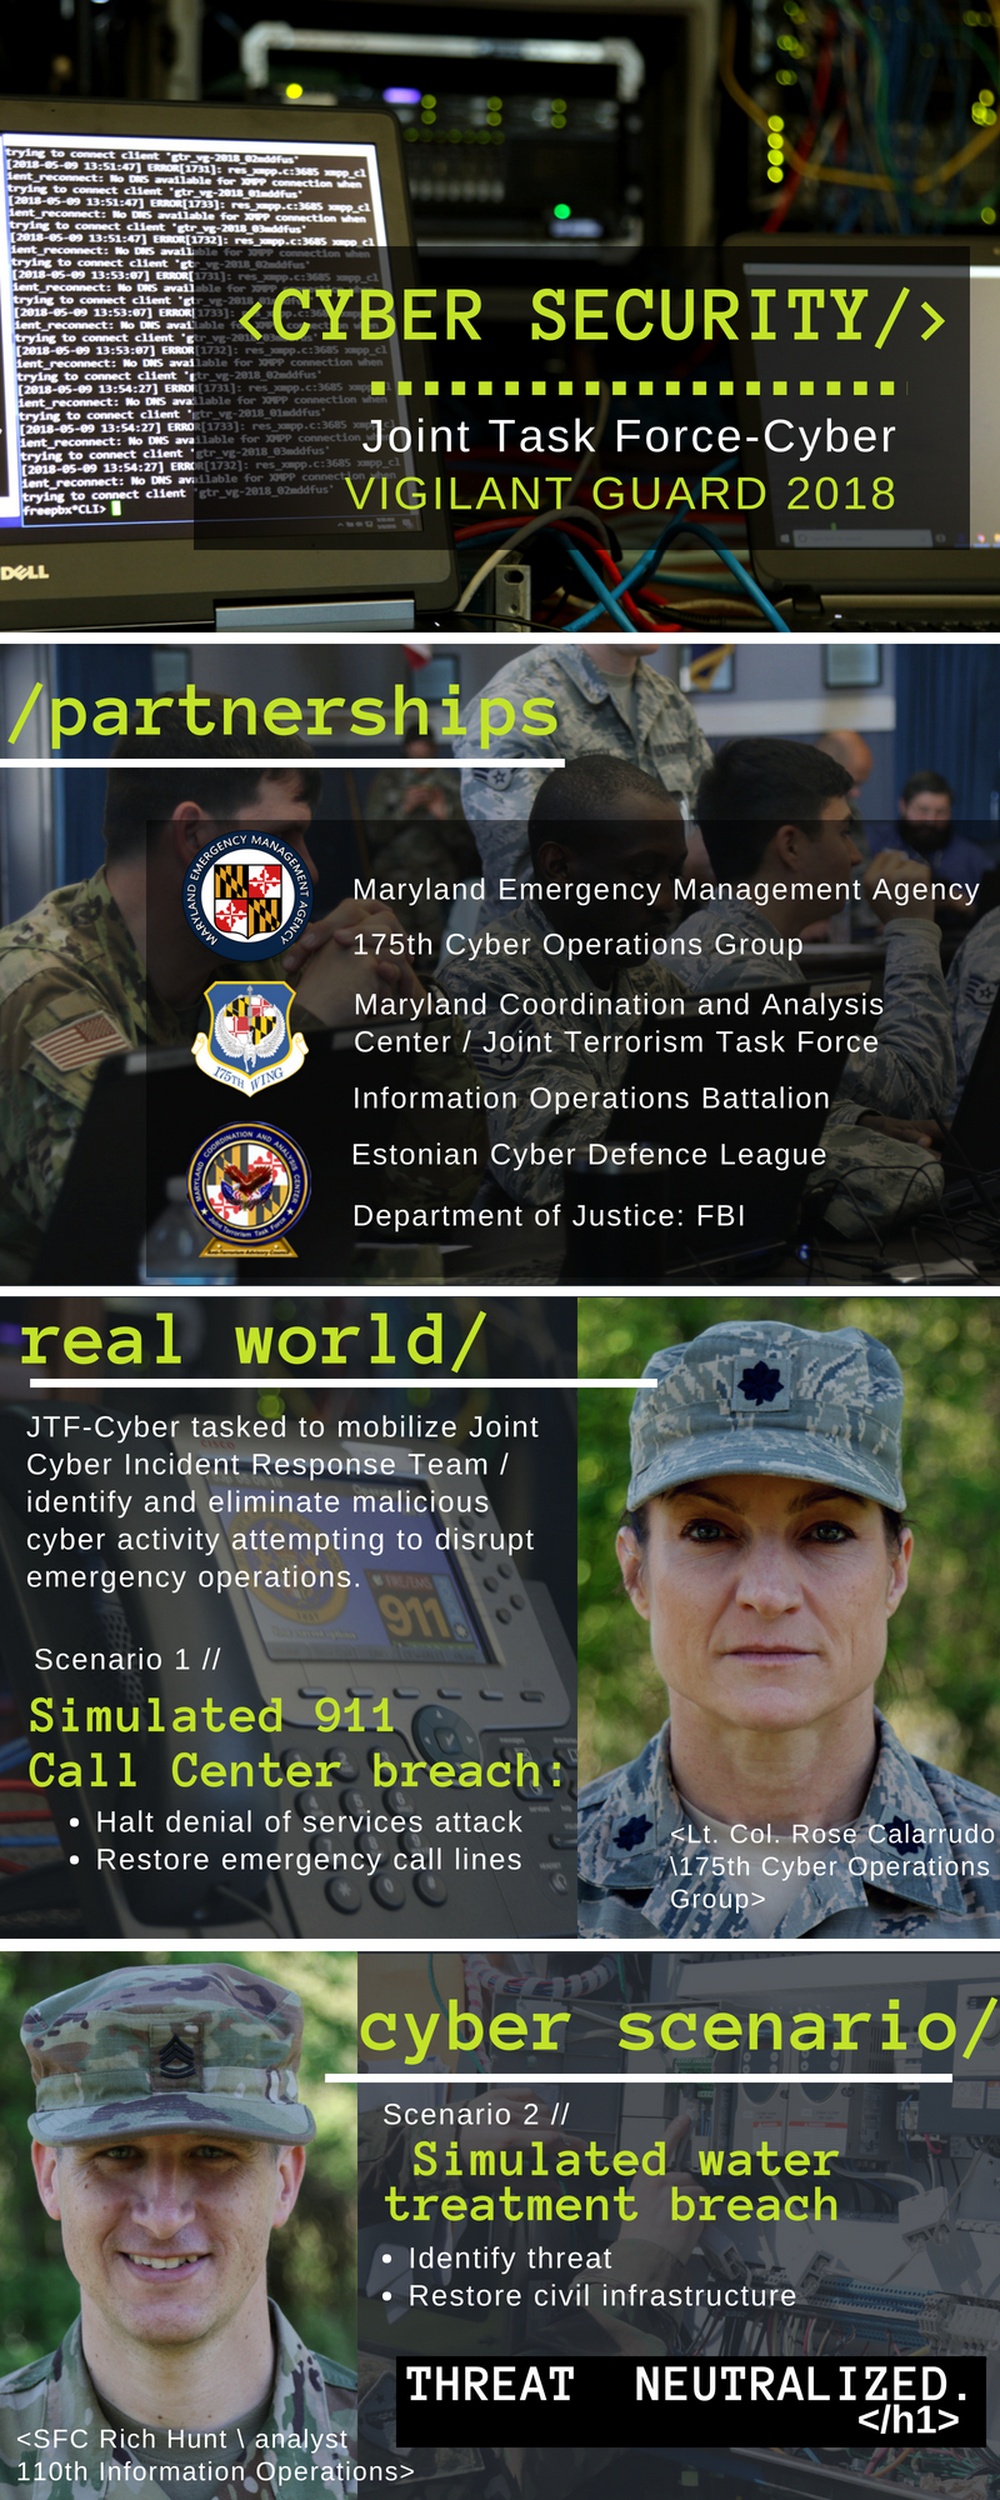 Joint Task Force-Cyber at Vigilant Guard 2018